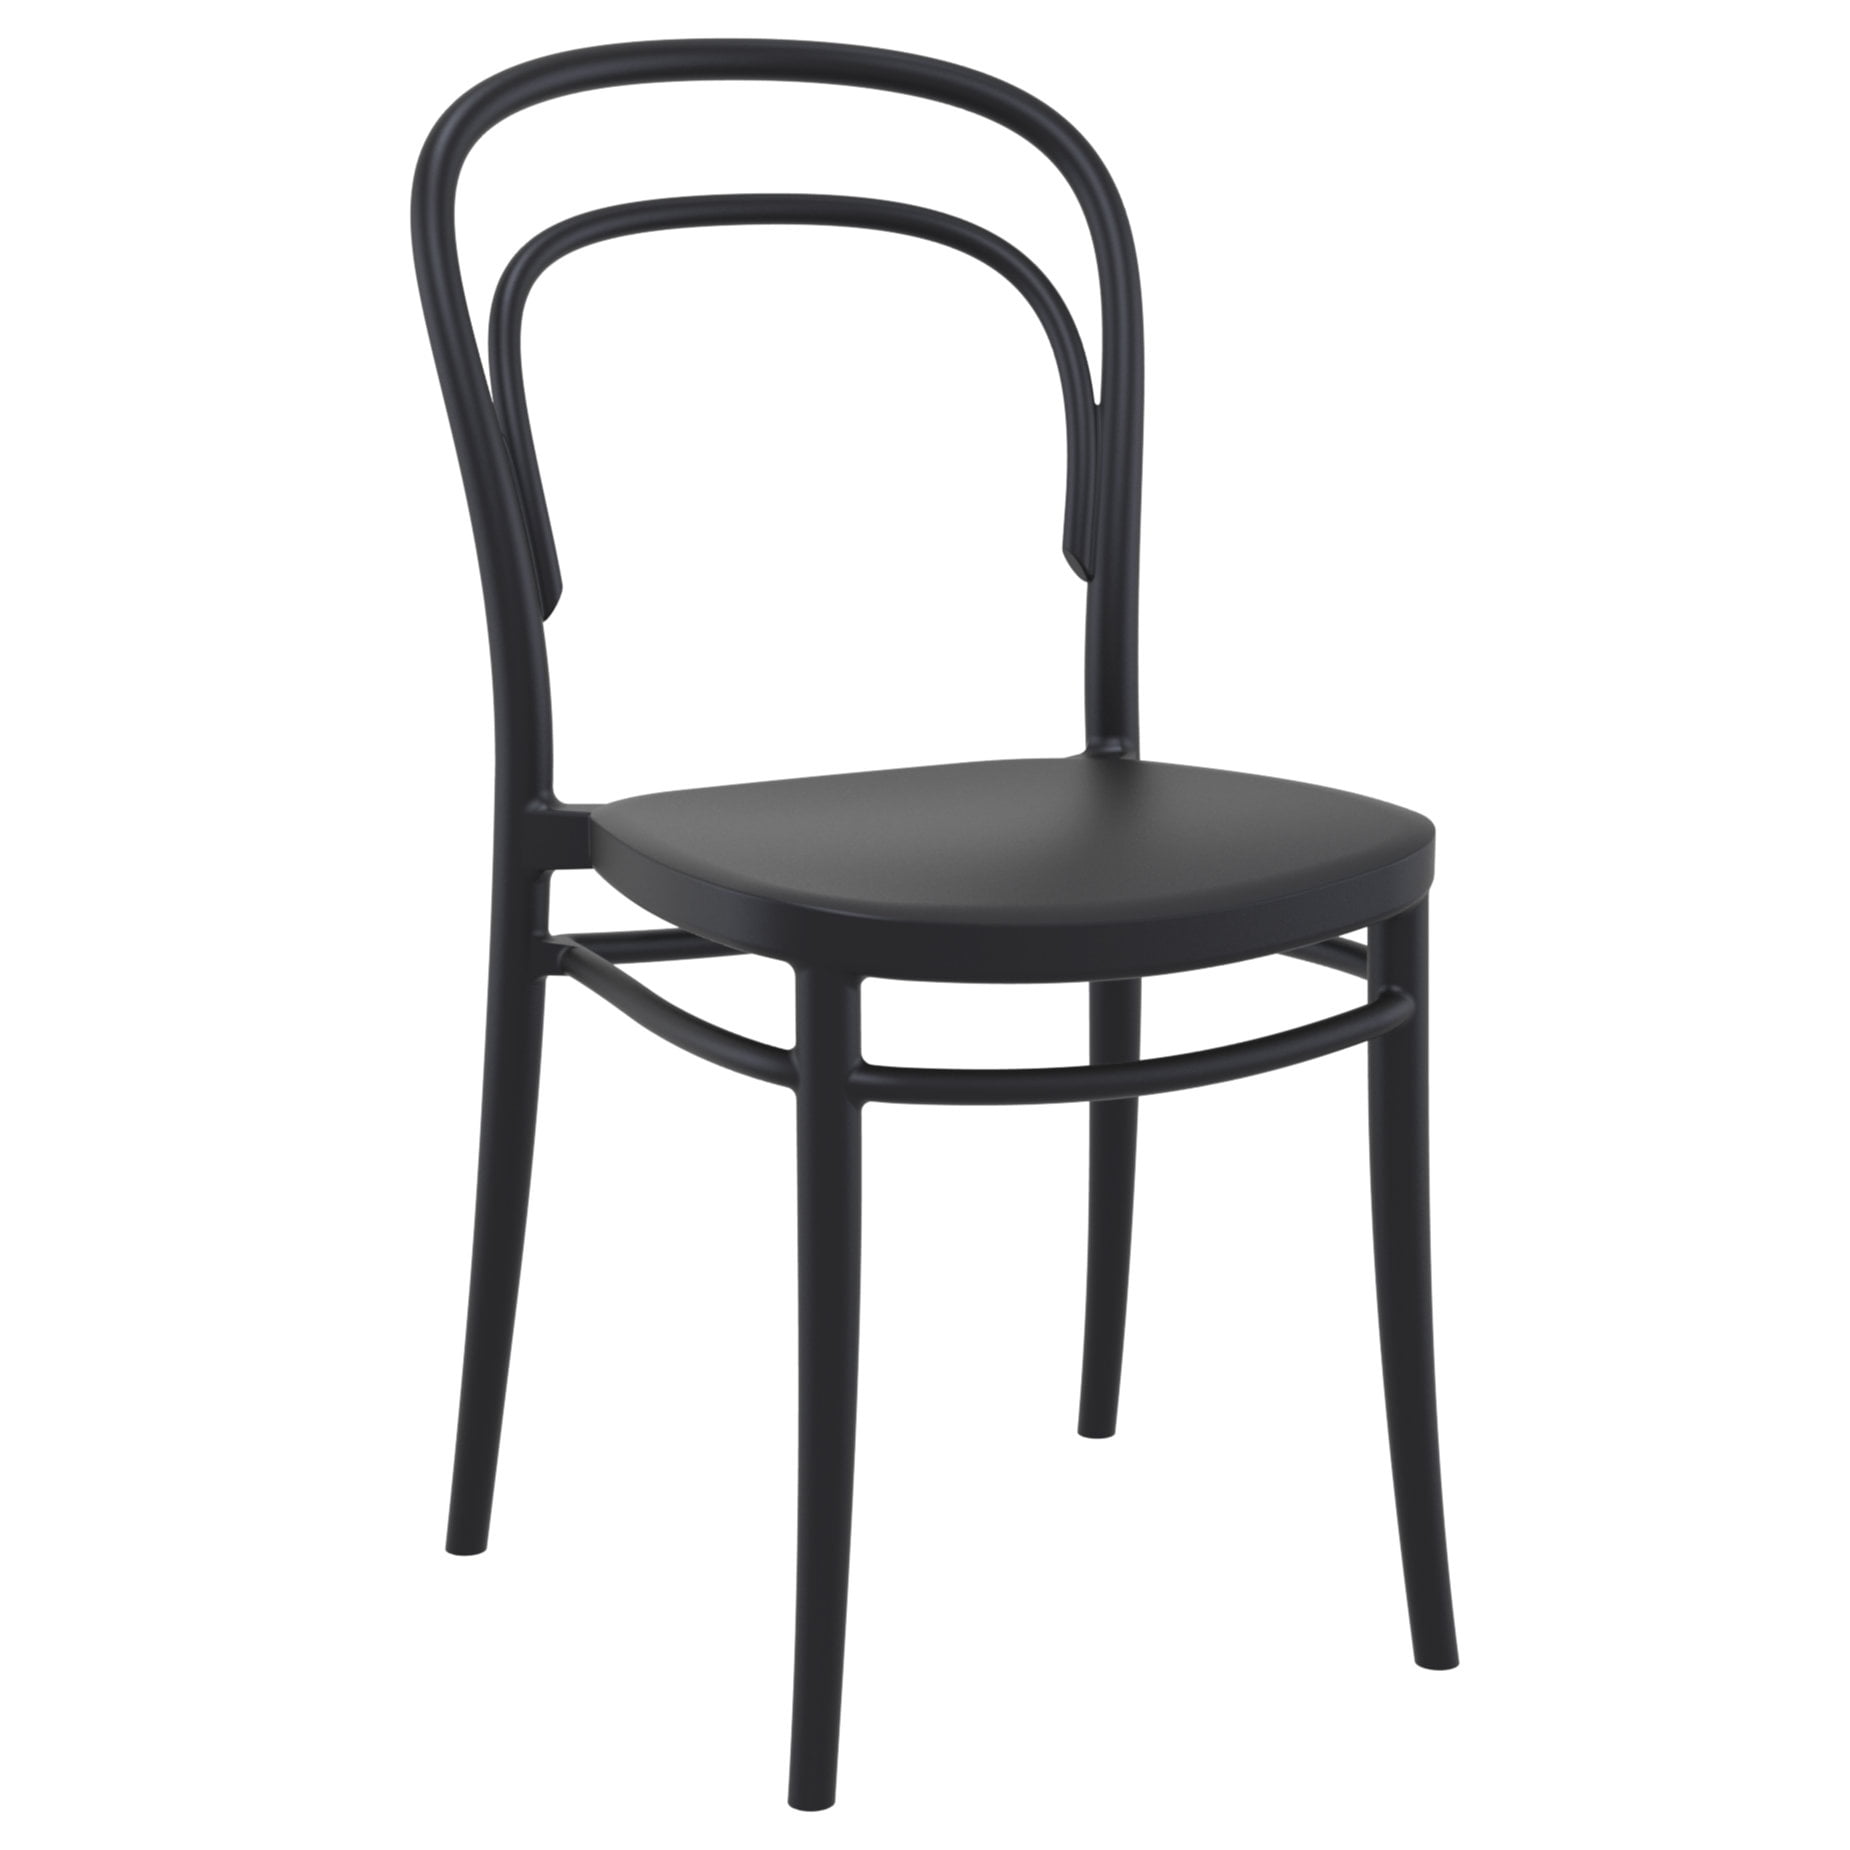 Isp251-bla Marie Resin Outdoor Chair, Black